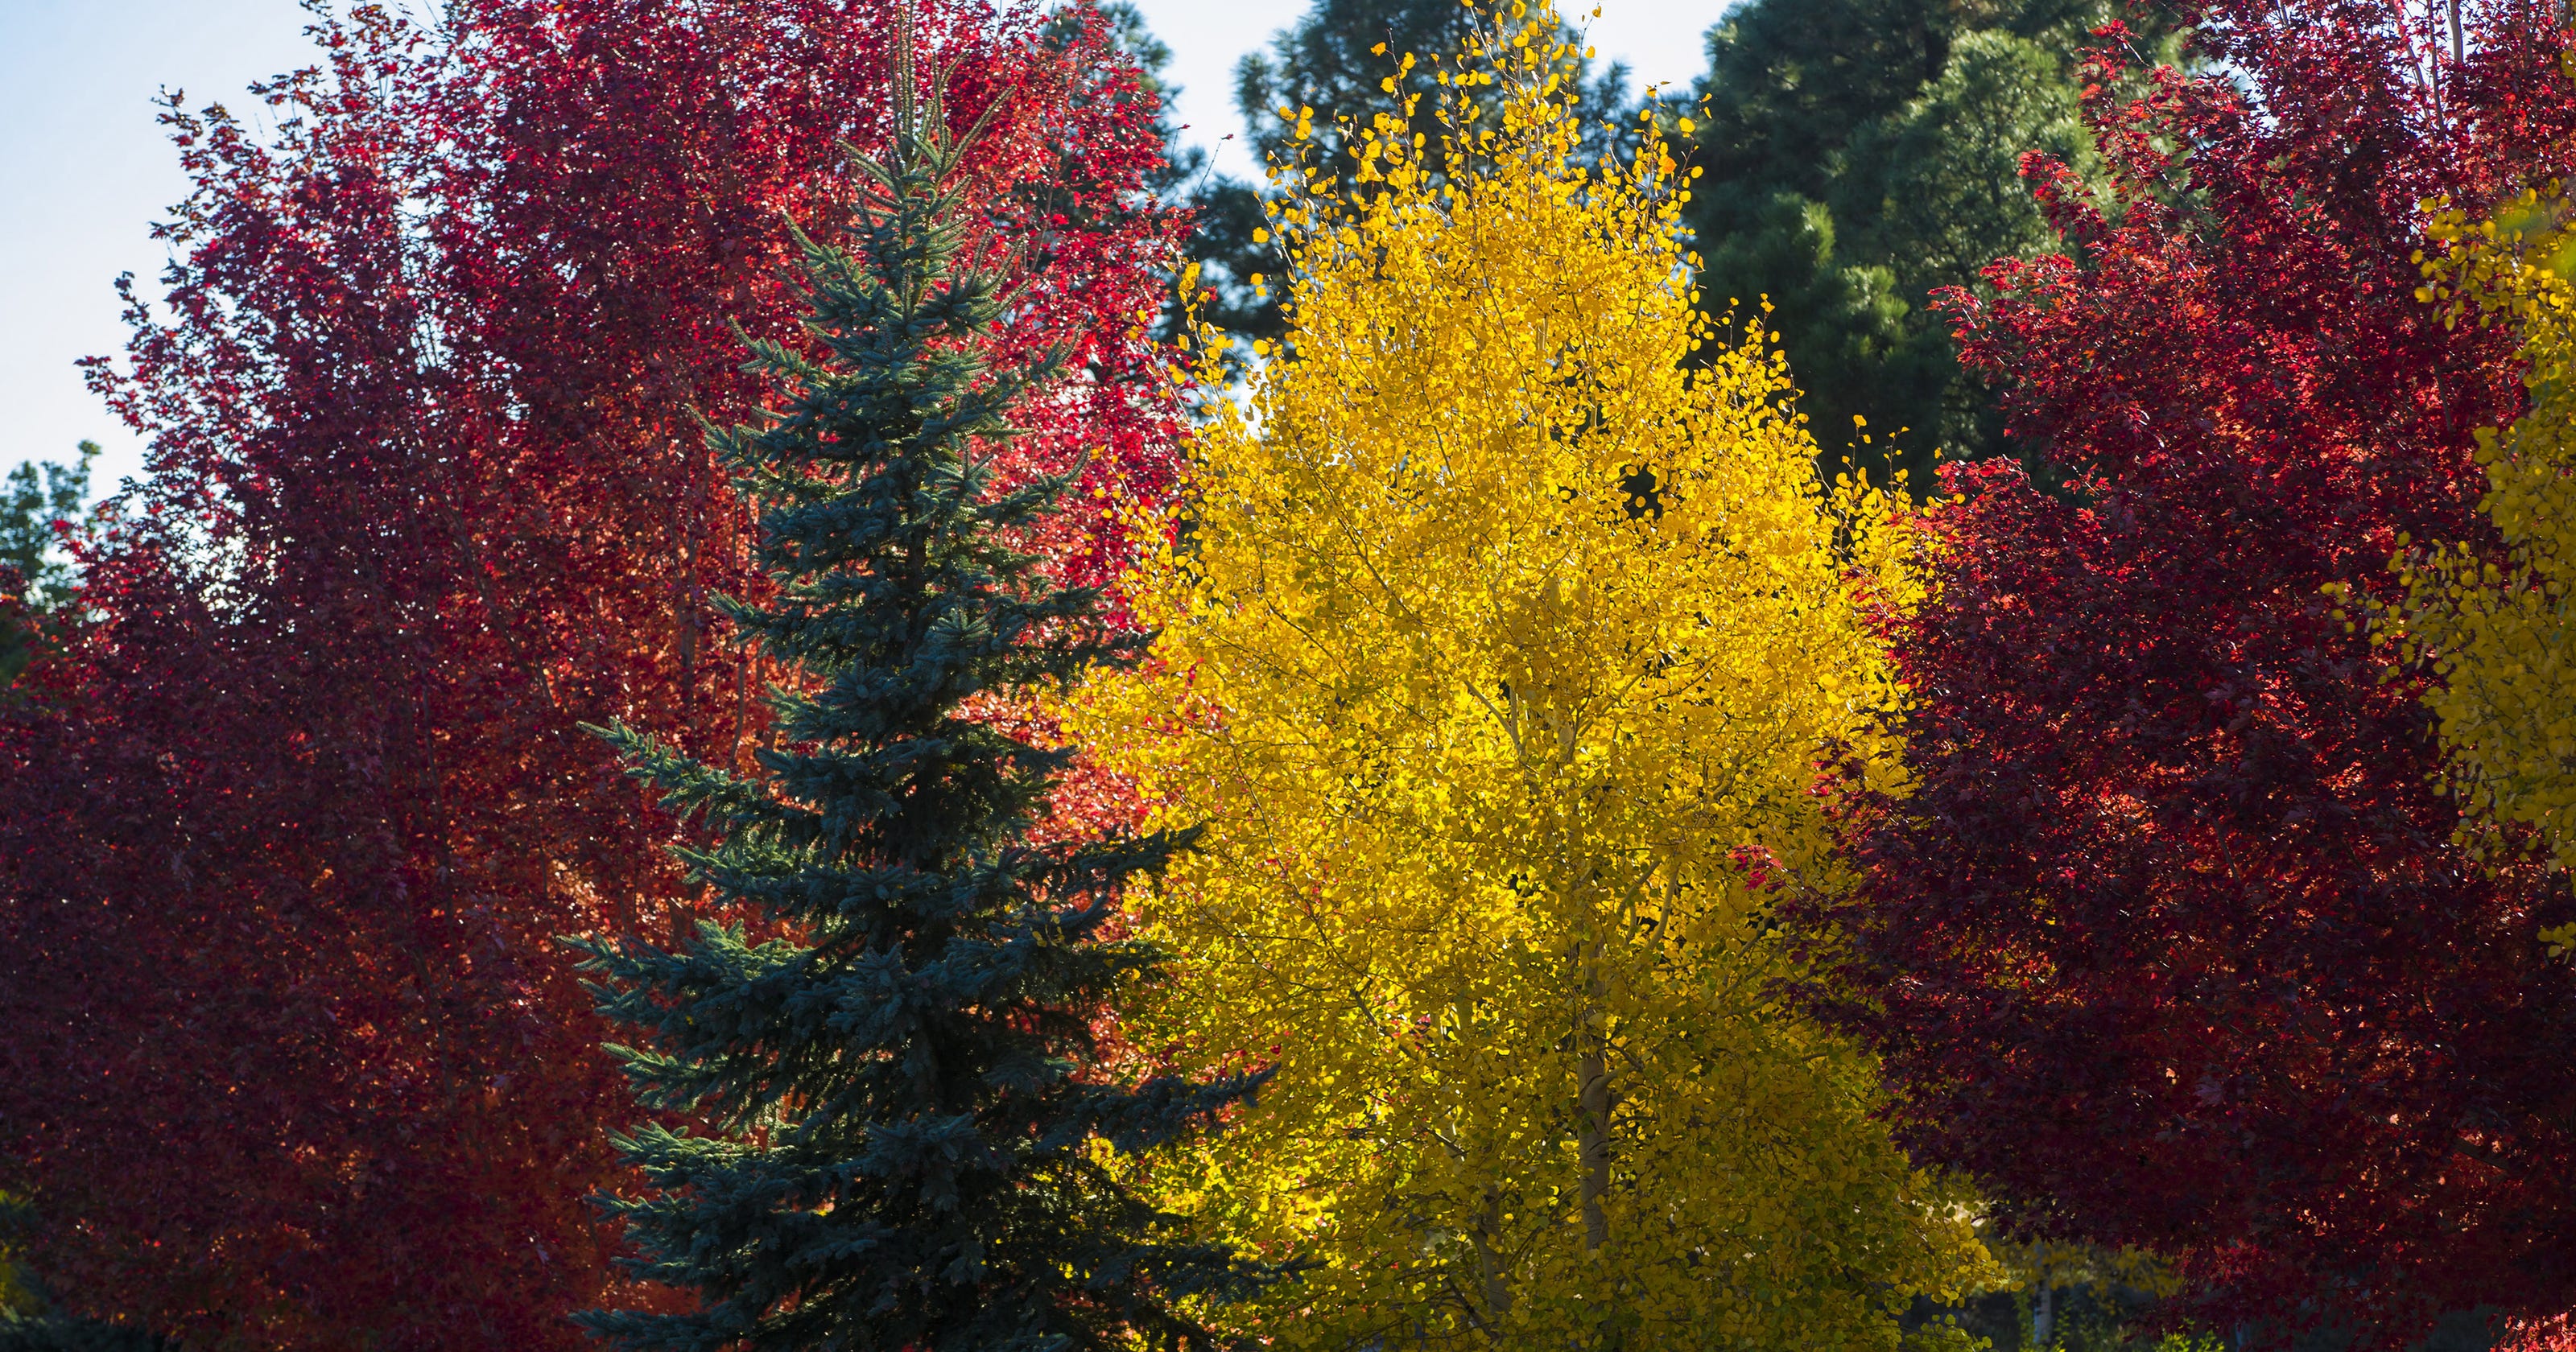 Here's where to see Arizona's fall colors